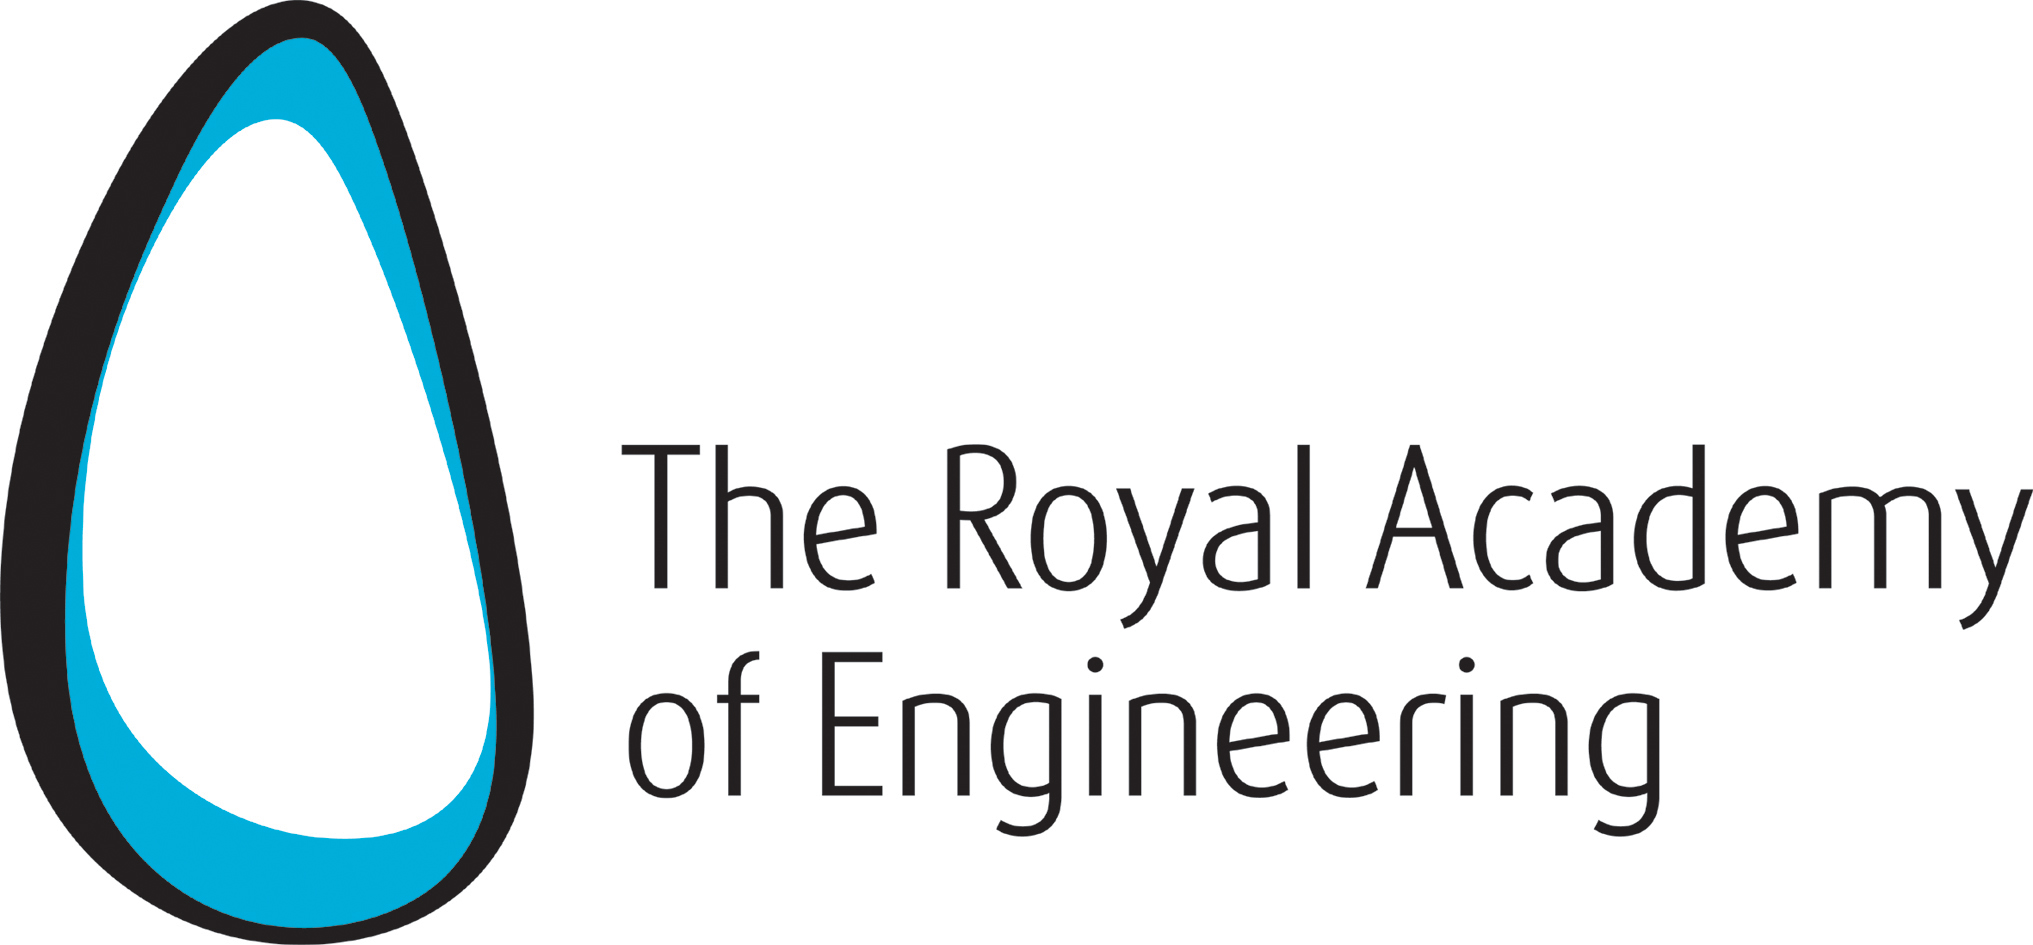 Royal Academy of Engineering logo